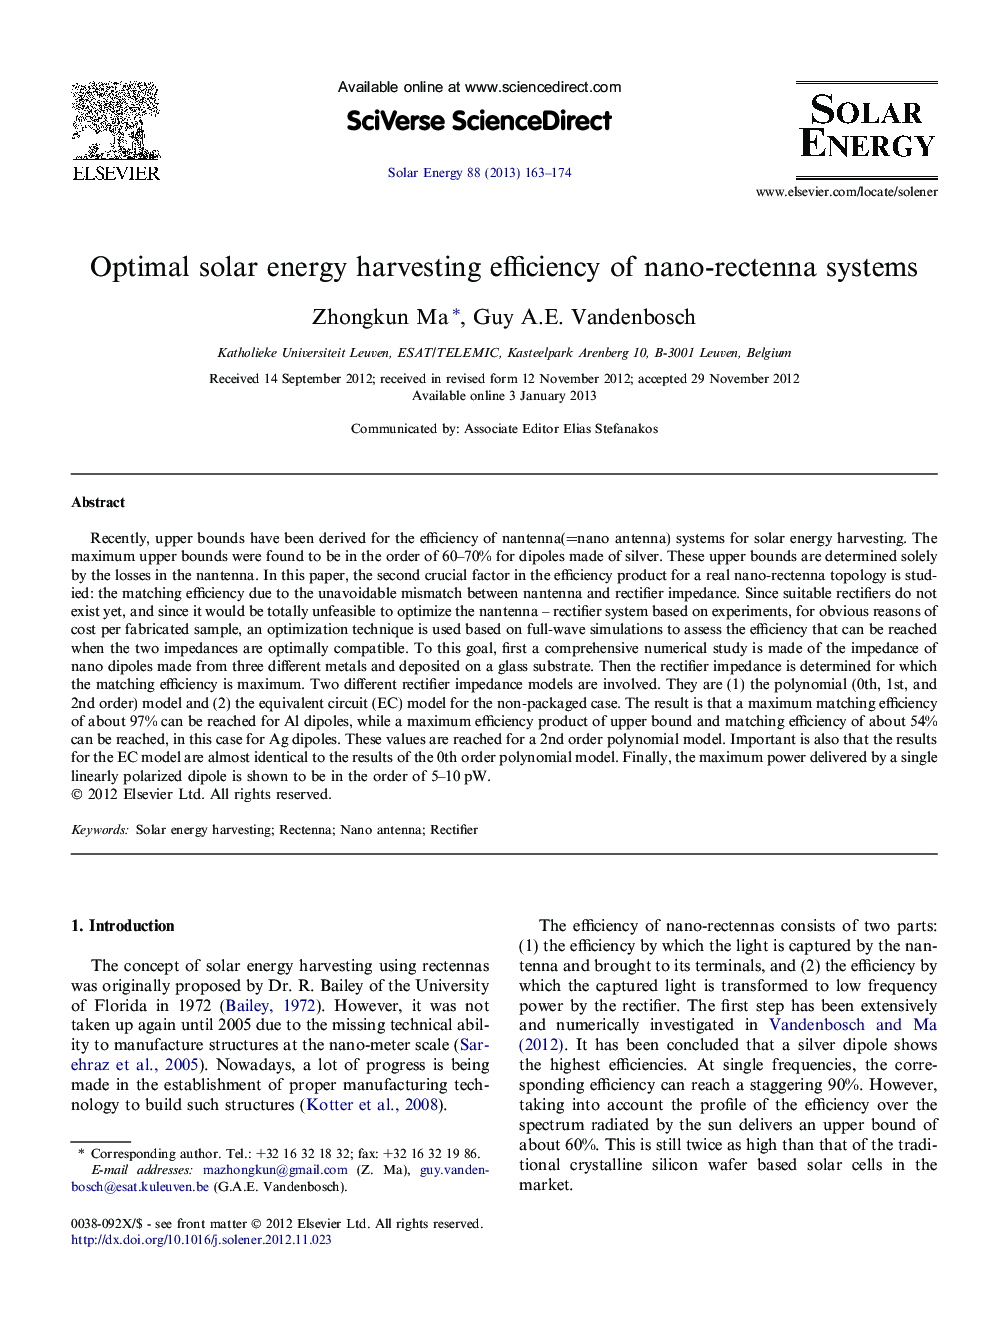 Optimal solar energy harvesting efficiency of nano-rectenna systems